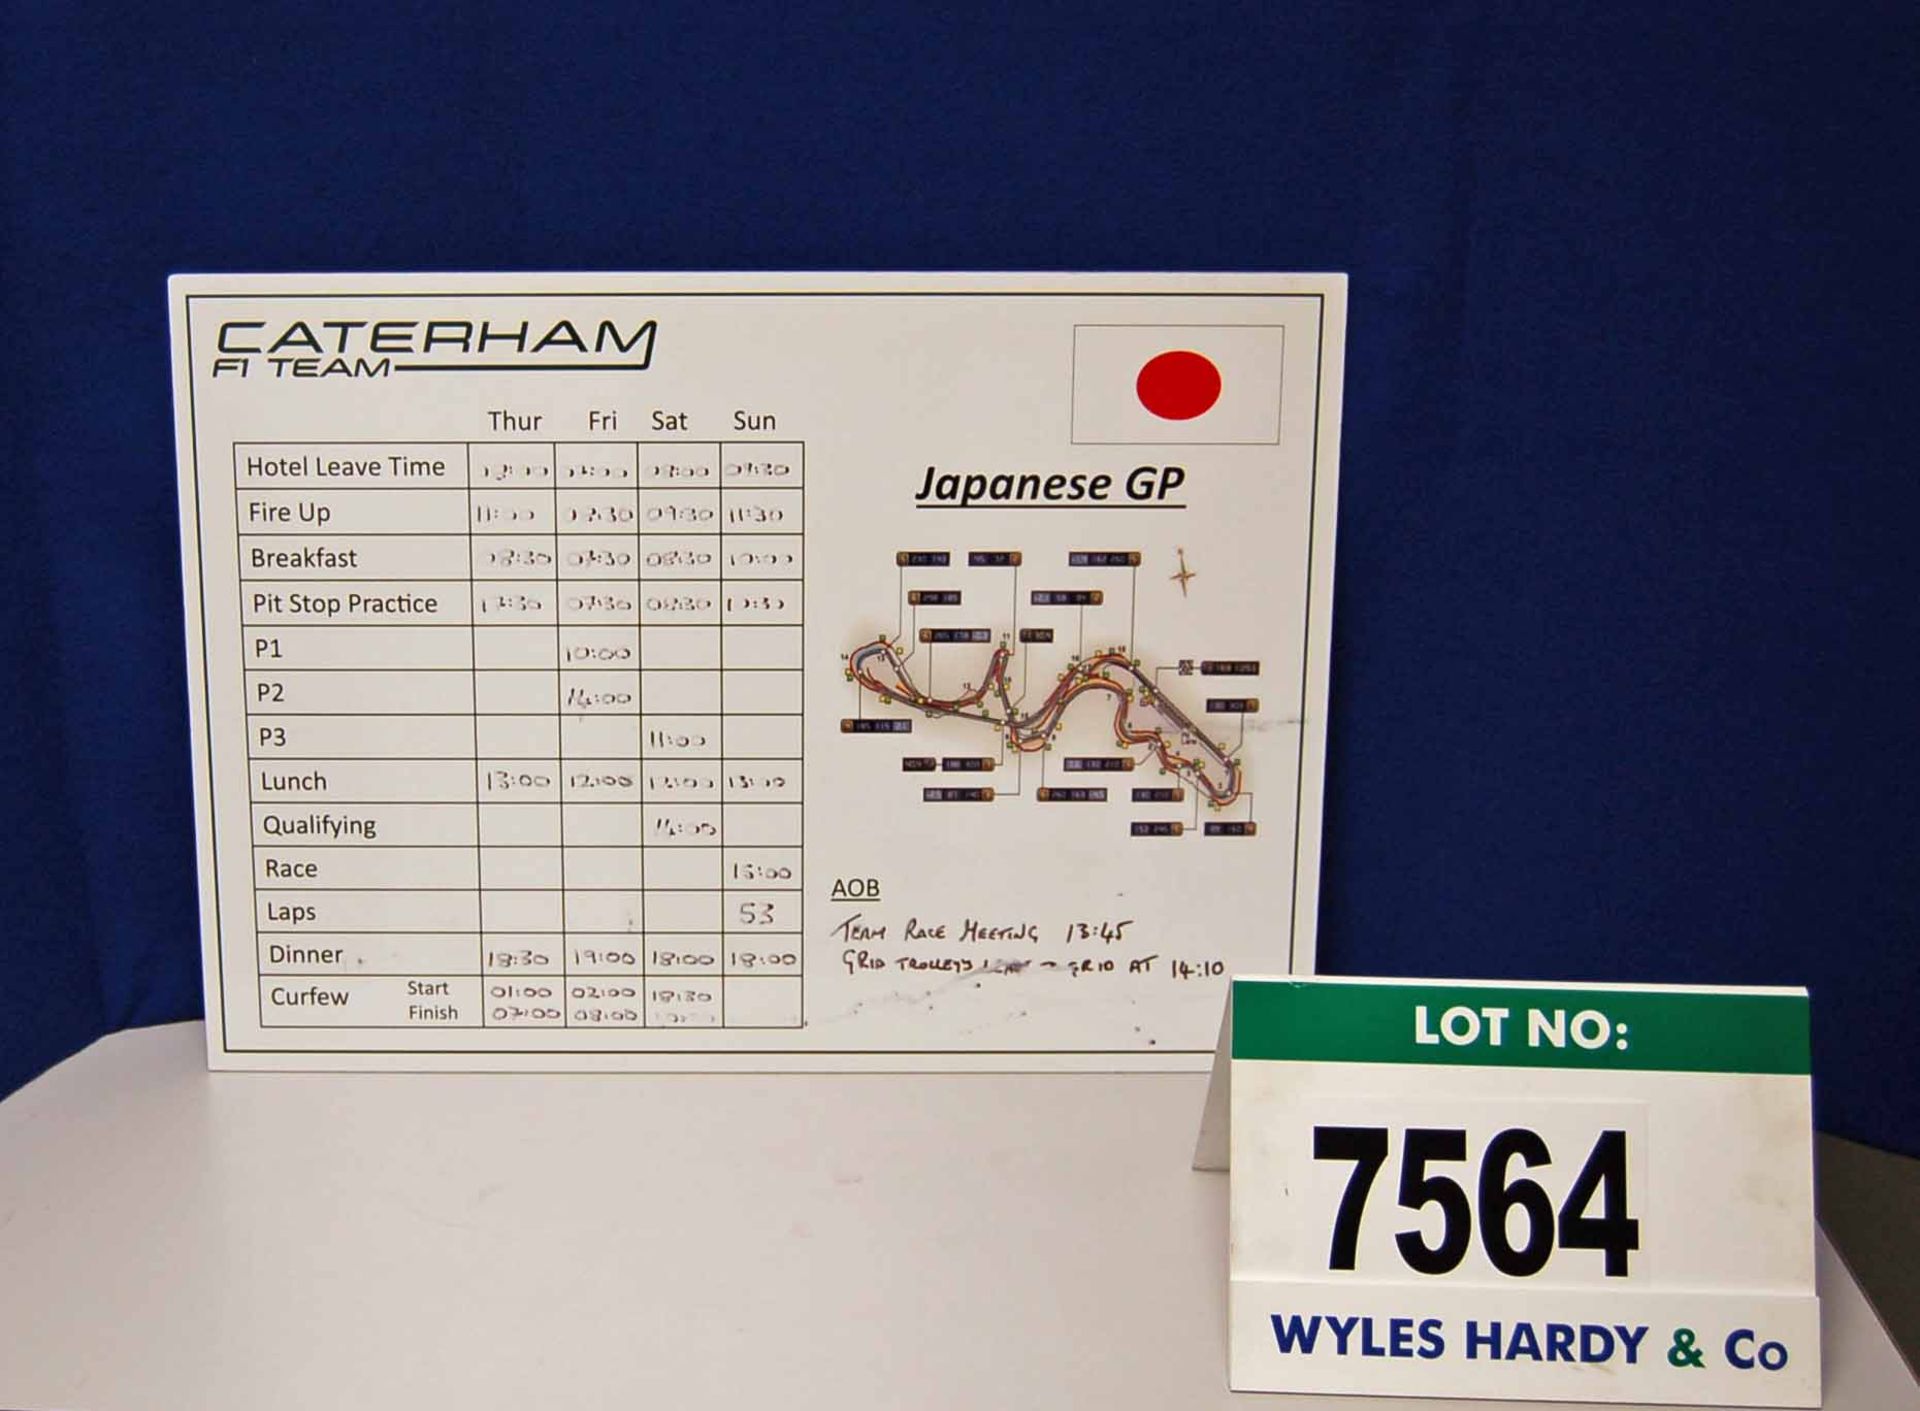 A CATERHAM F1 Team 500mm x 700mm Foamex Pit Crew Information Board - Japanese Grand Prix  Want it